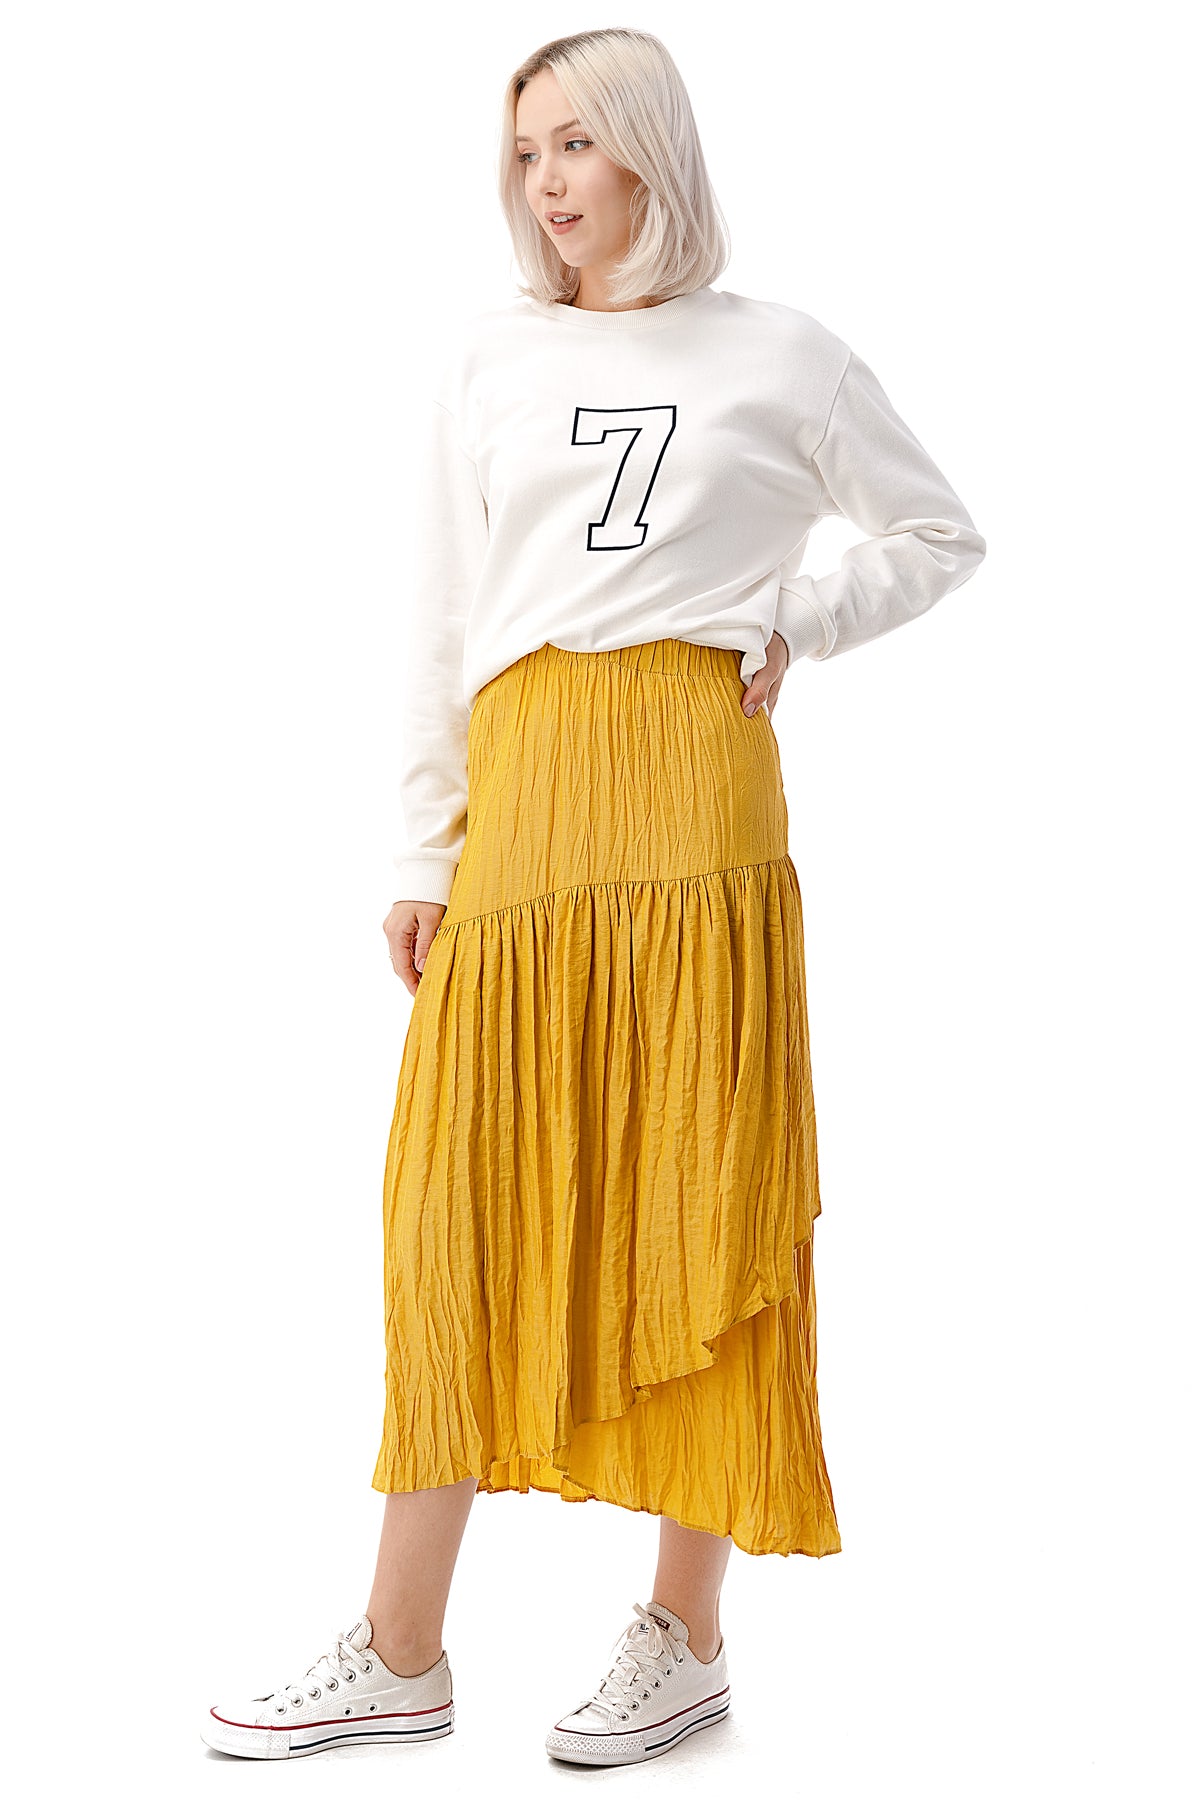 EDGY Land Girl's and Women's High Waist Over Lap Bias Seam Shirred Midi Flowy Skirt